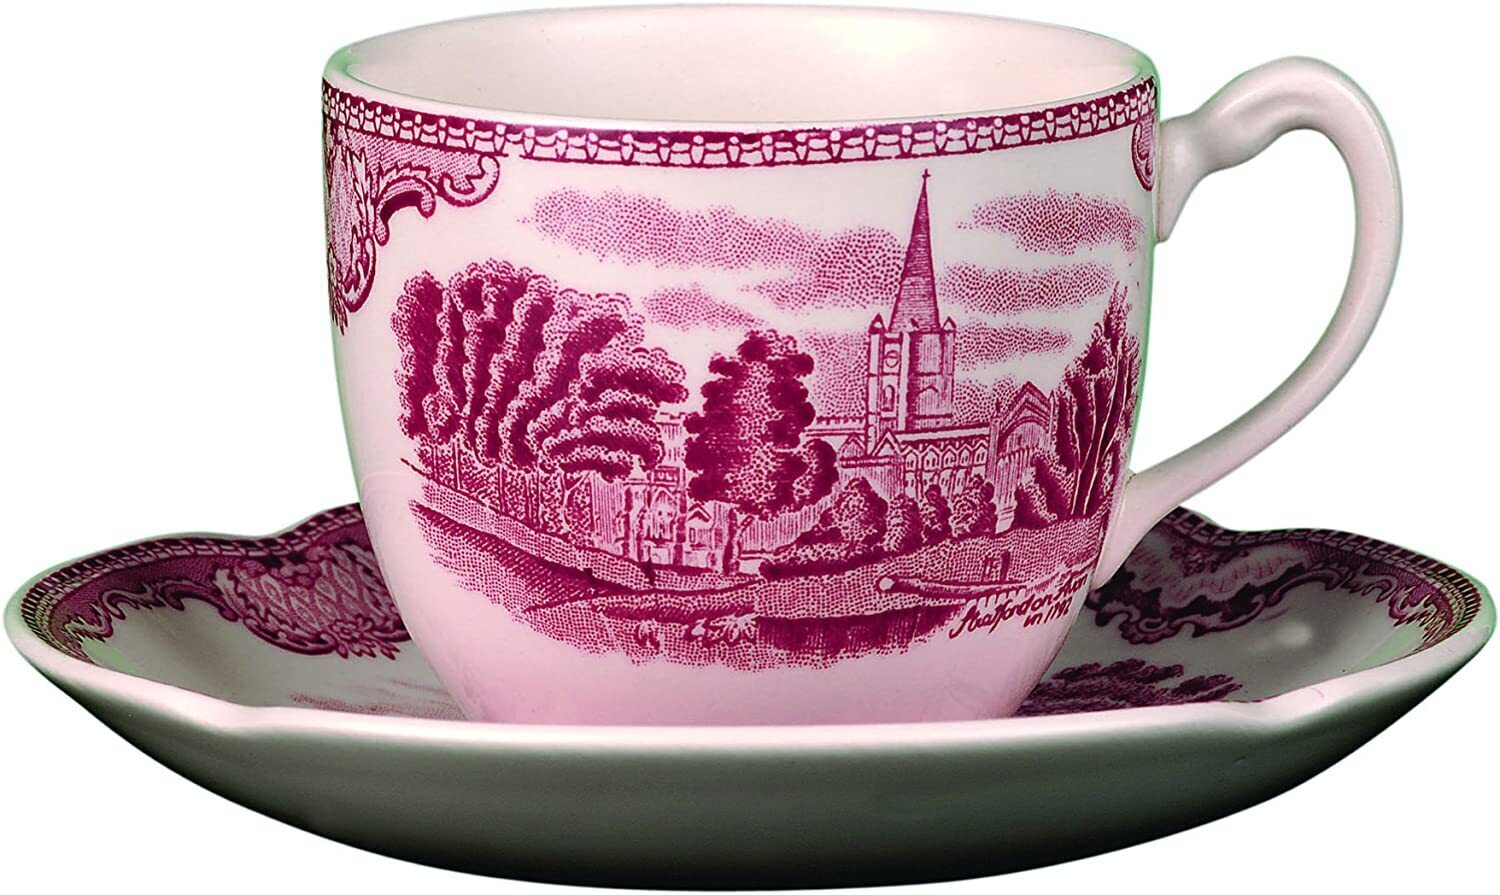 Johnson Brothers Old Britain Castles dinnerware teacup